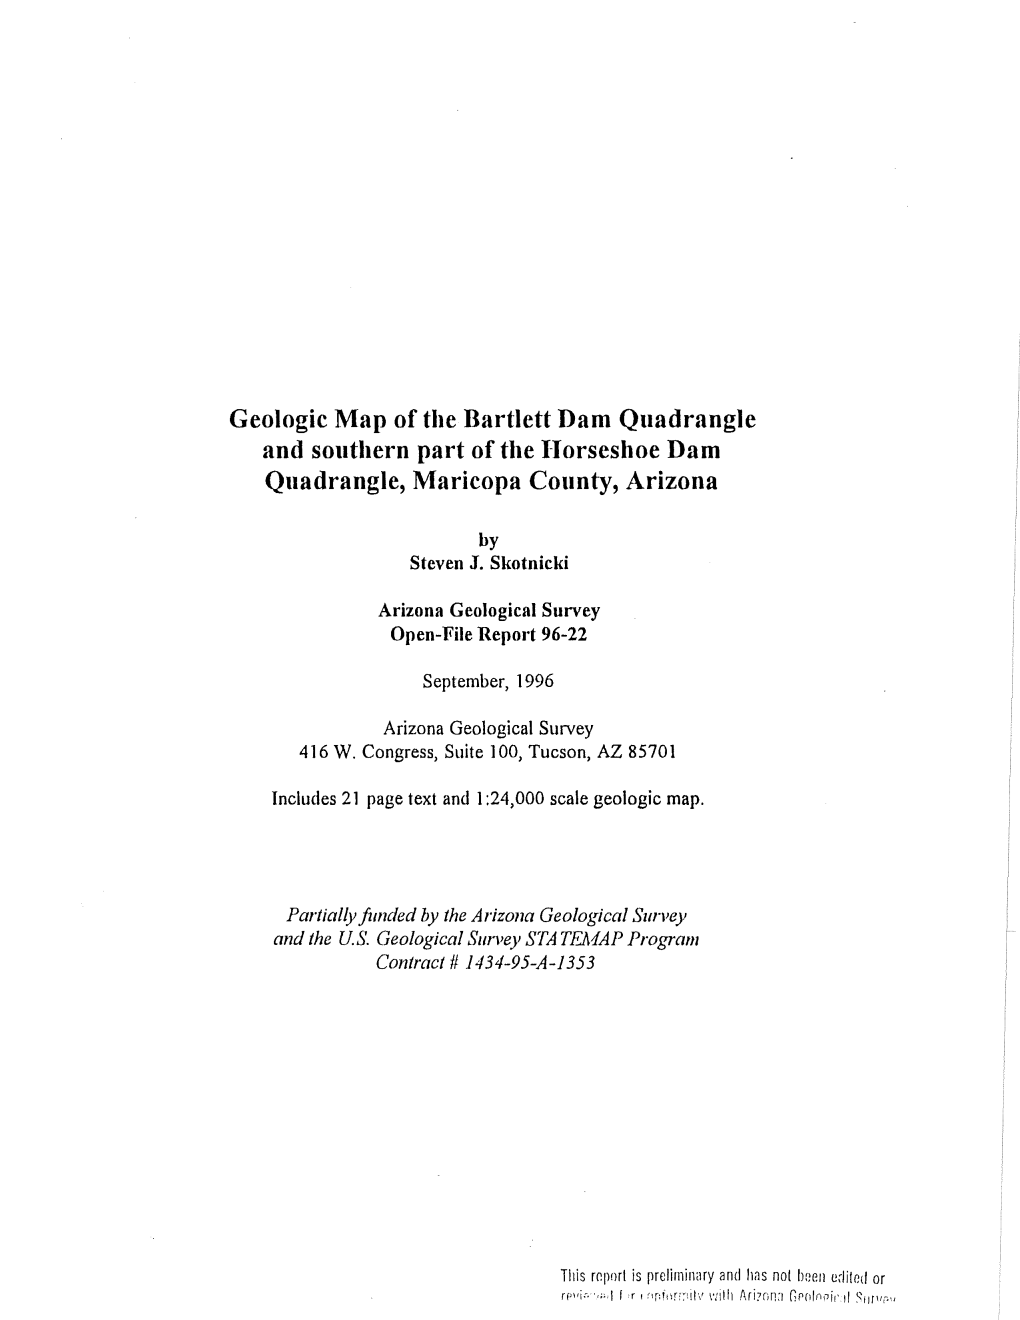 Geologic Map of the Bartlett Dam Quadrangle and Southern Part of the I-Iorseshoe Dam Quadrangle, Maricopa County, Arizona